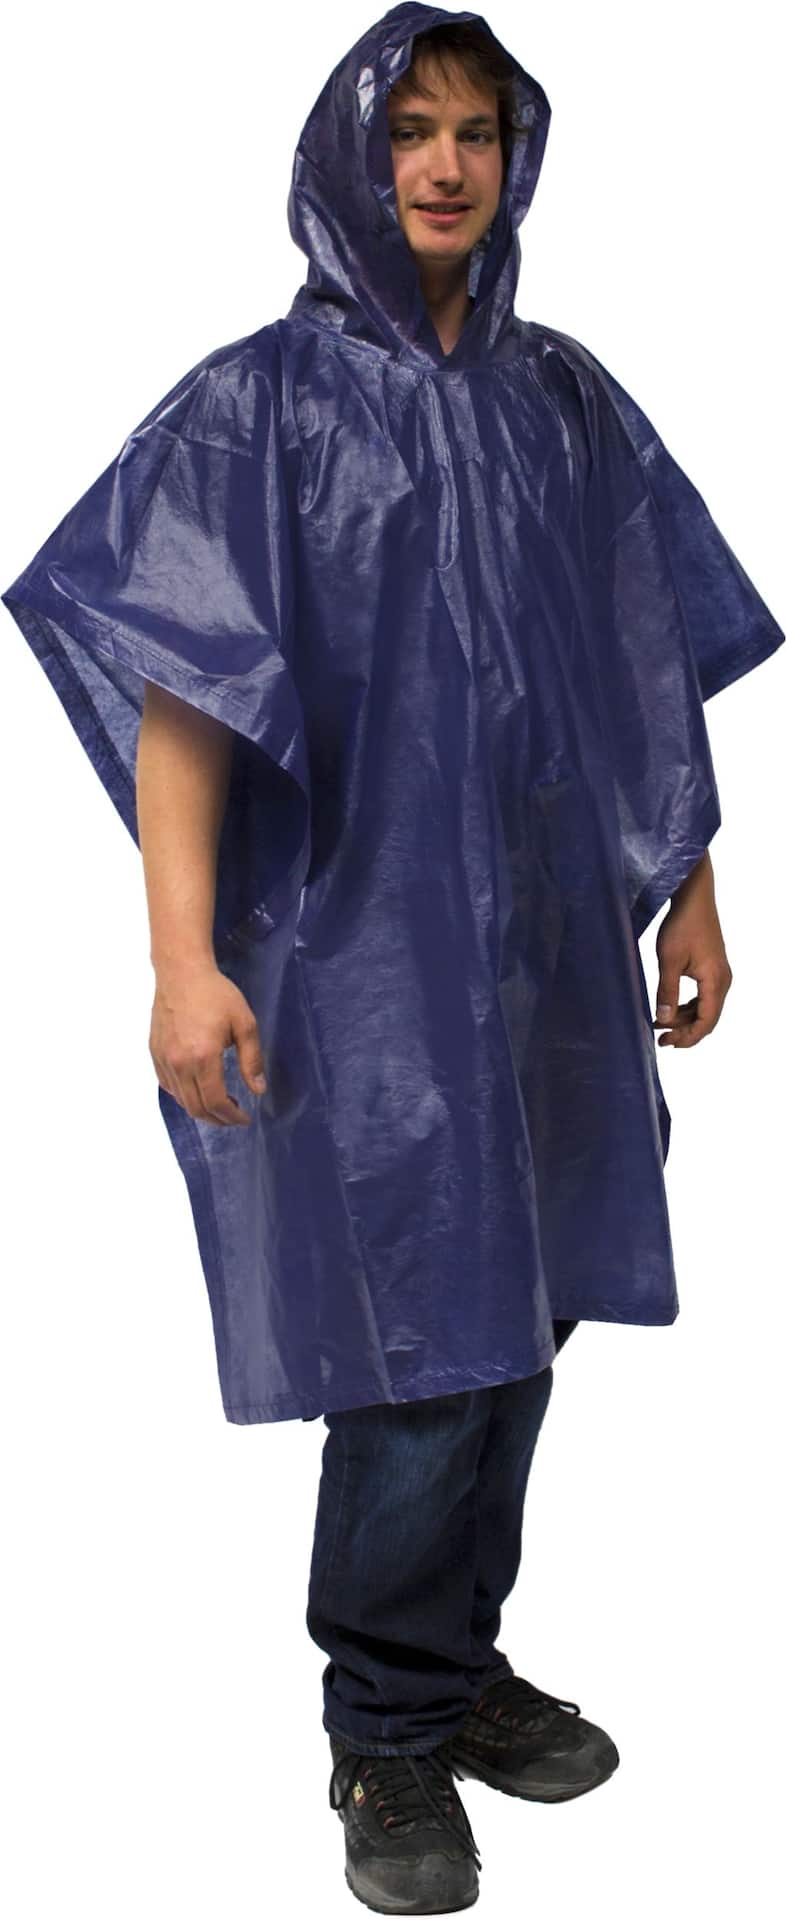 Adult Waterproof Vinyl 2-pc Rainsuit with Detachable Hood for